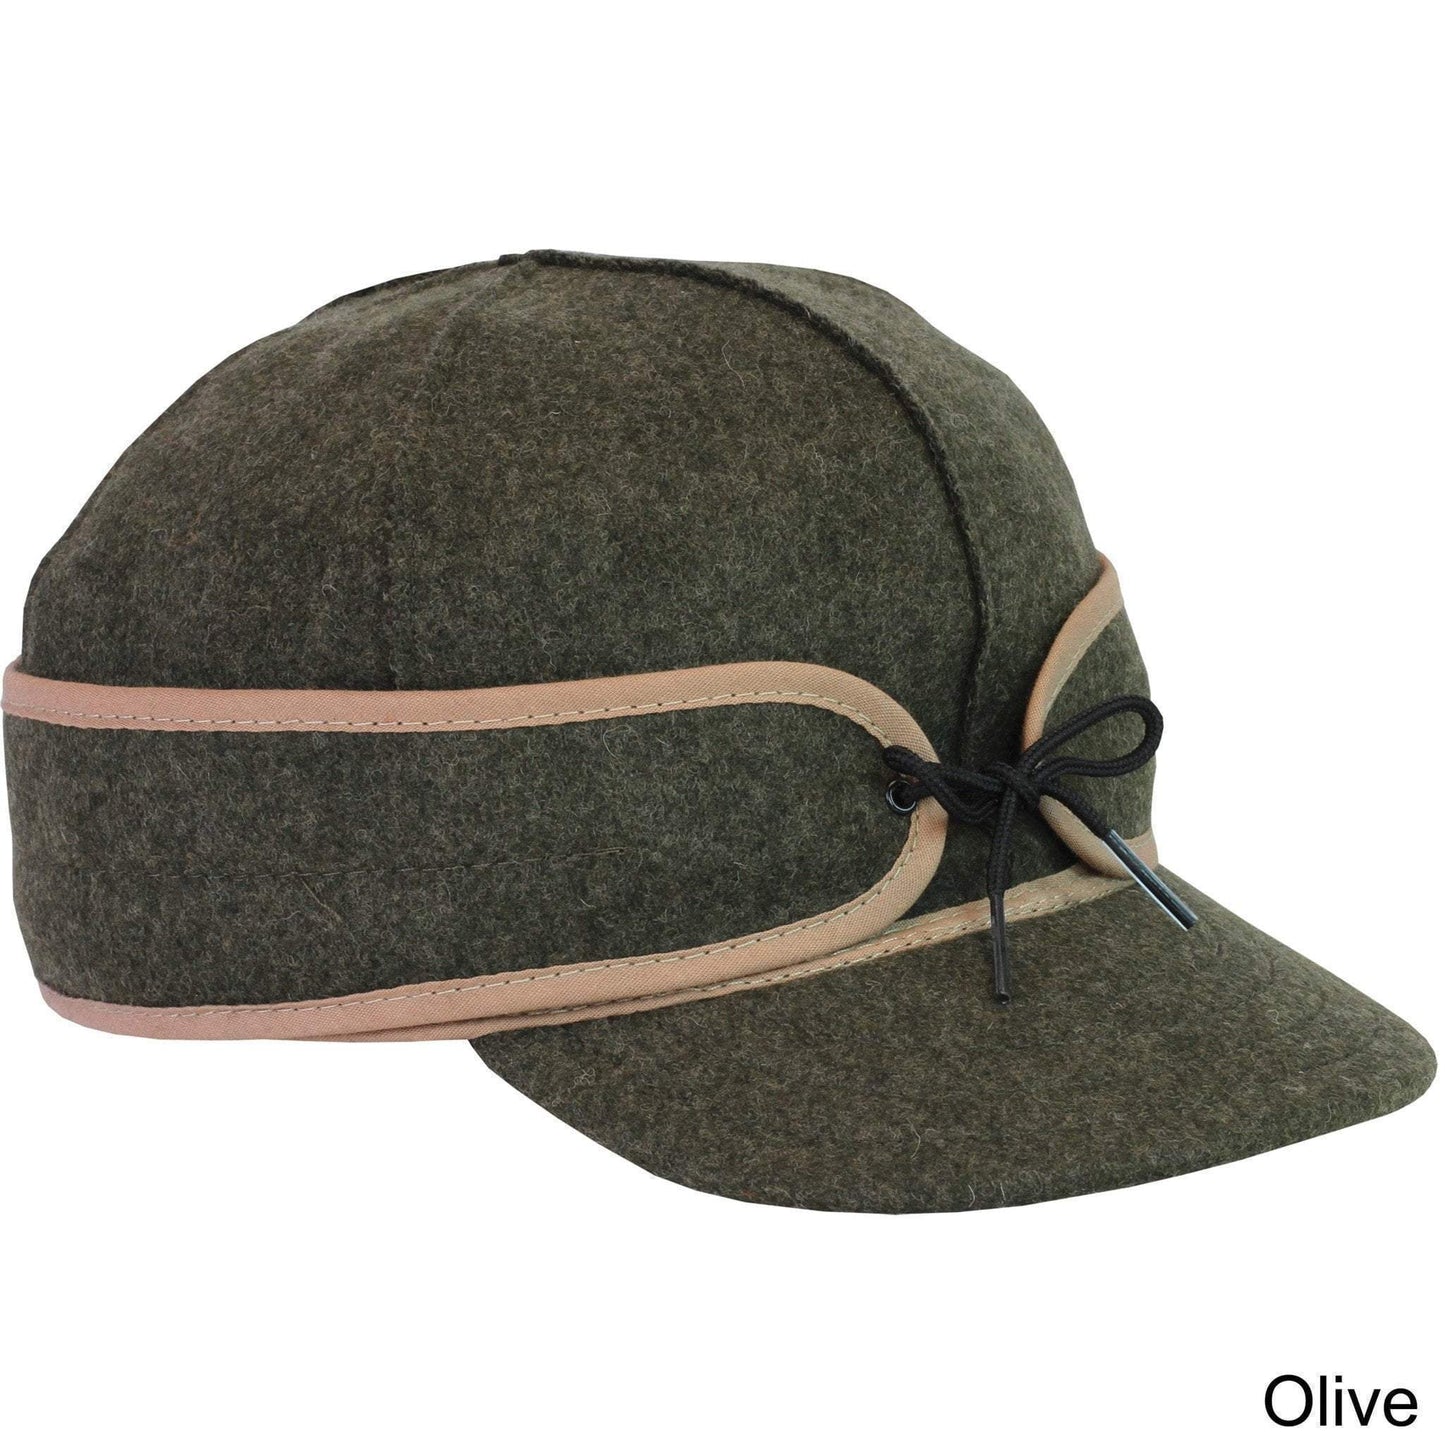 Artisanal Bags Olive Retro Wool Cap - Multiple Colors